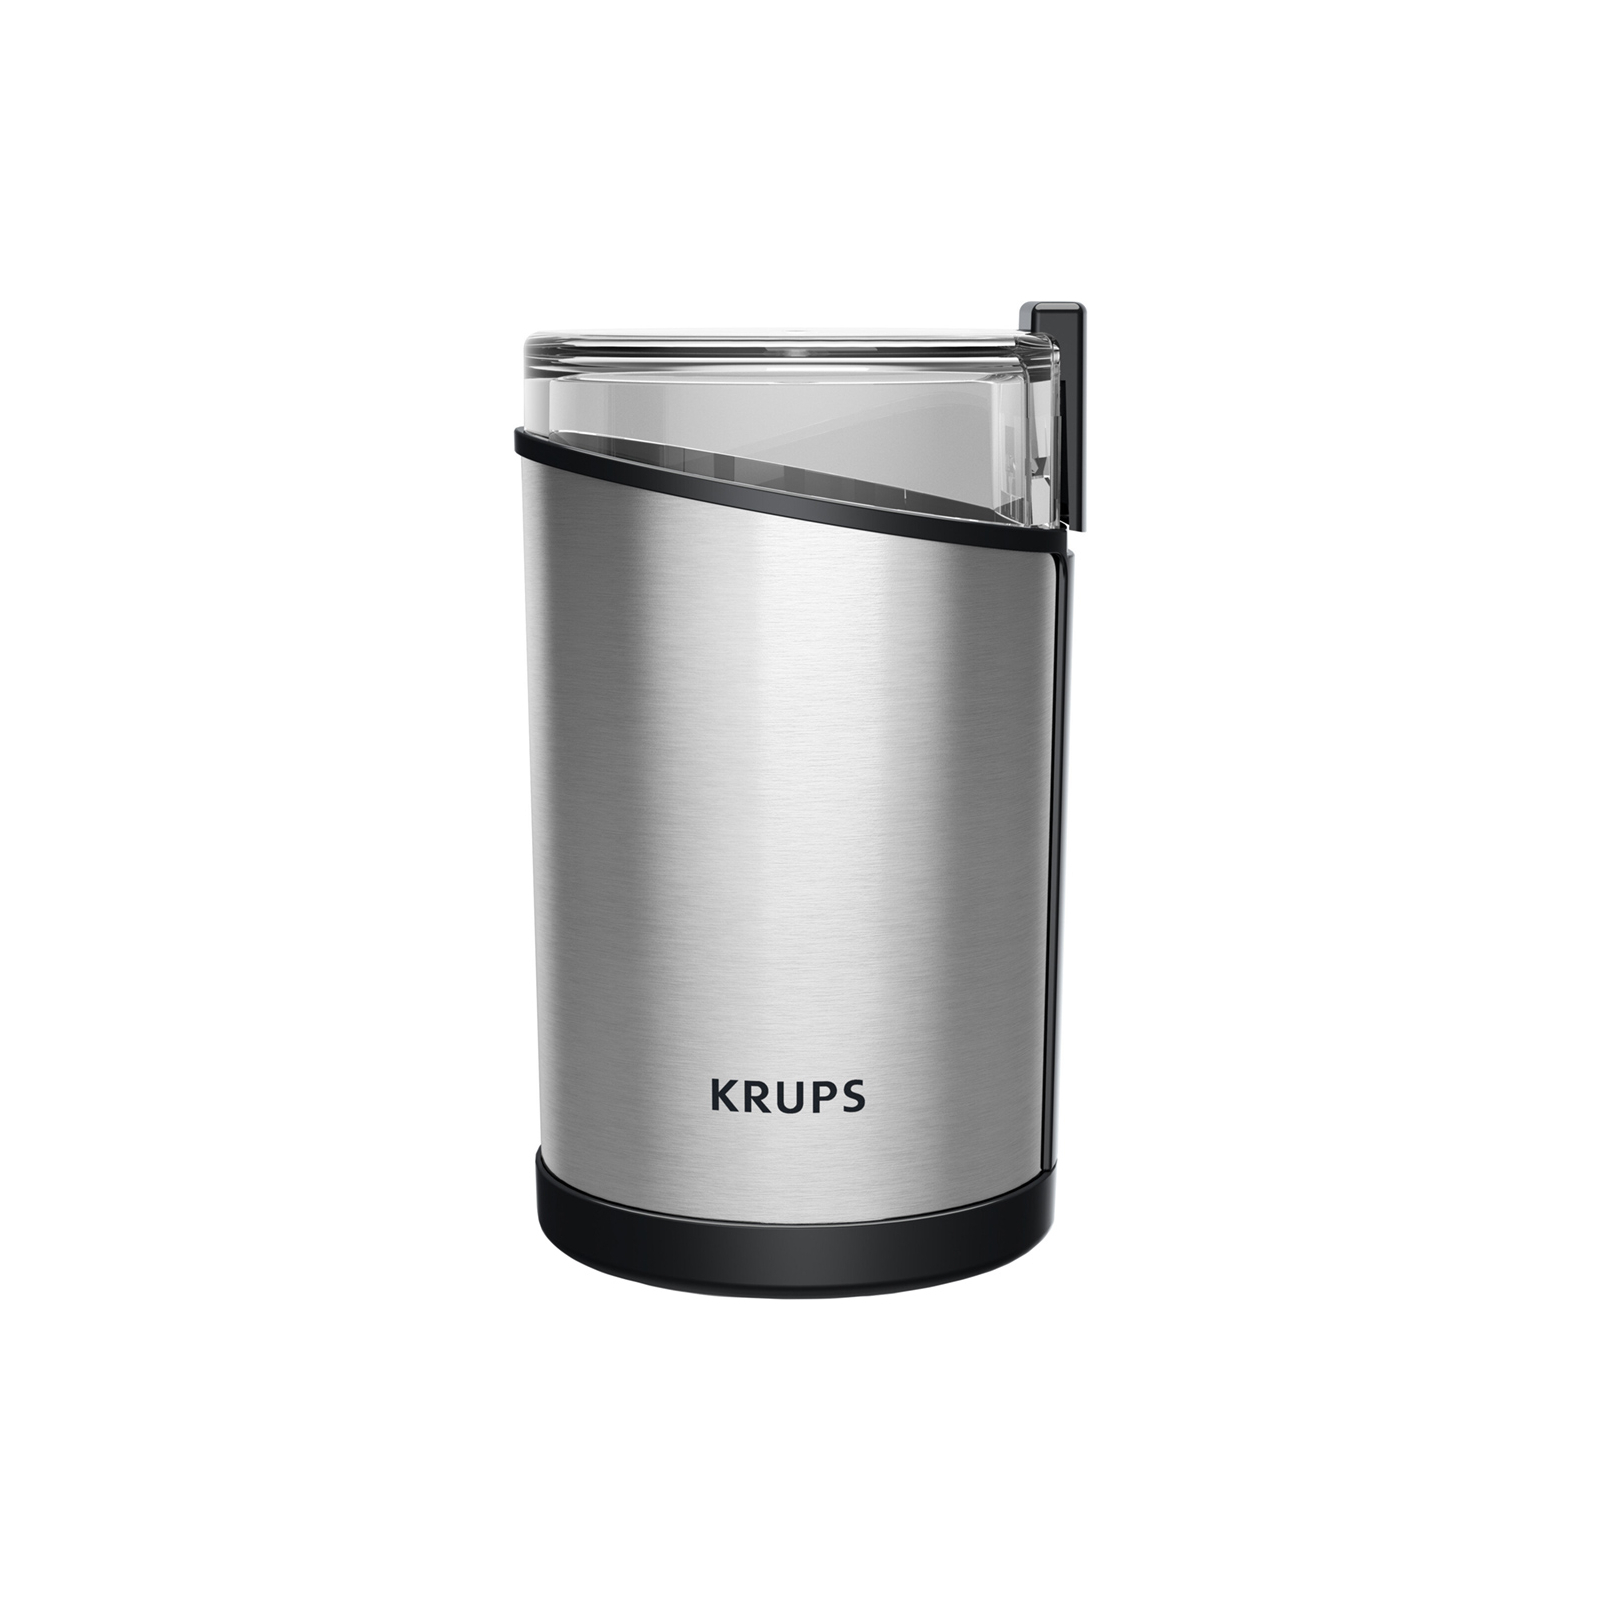 Кофемолка Krups GX204D10